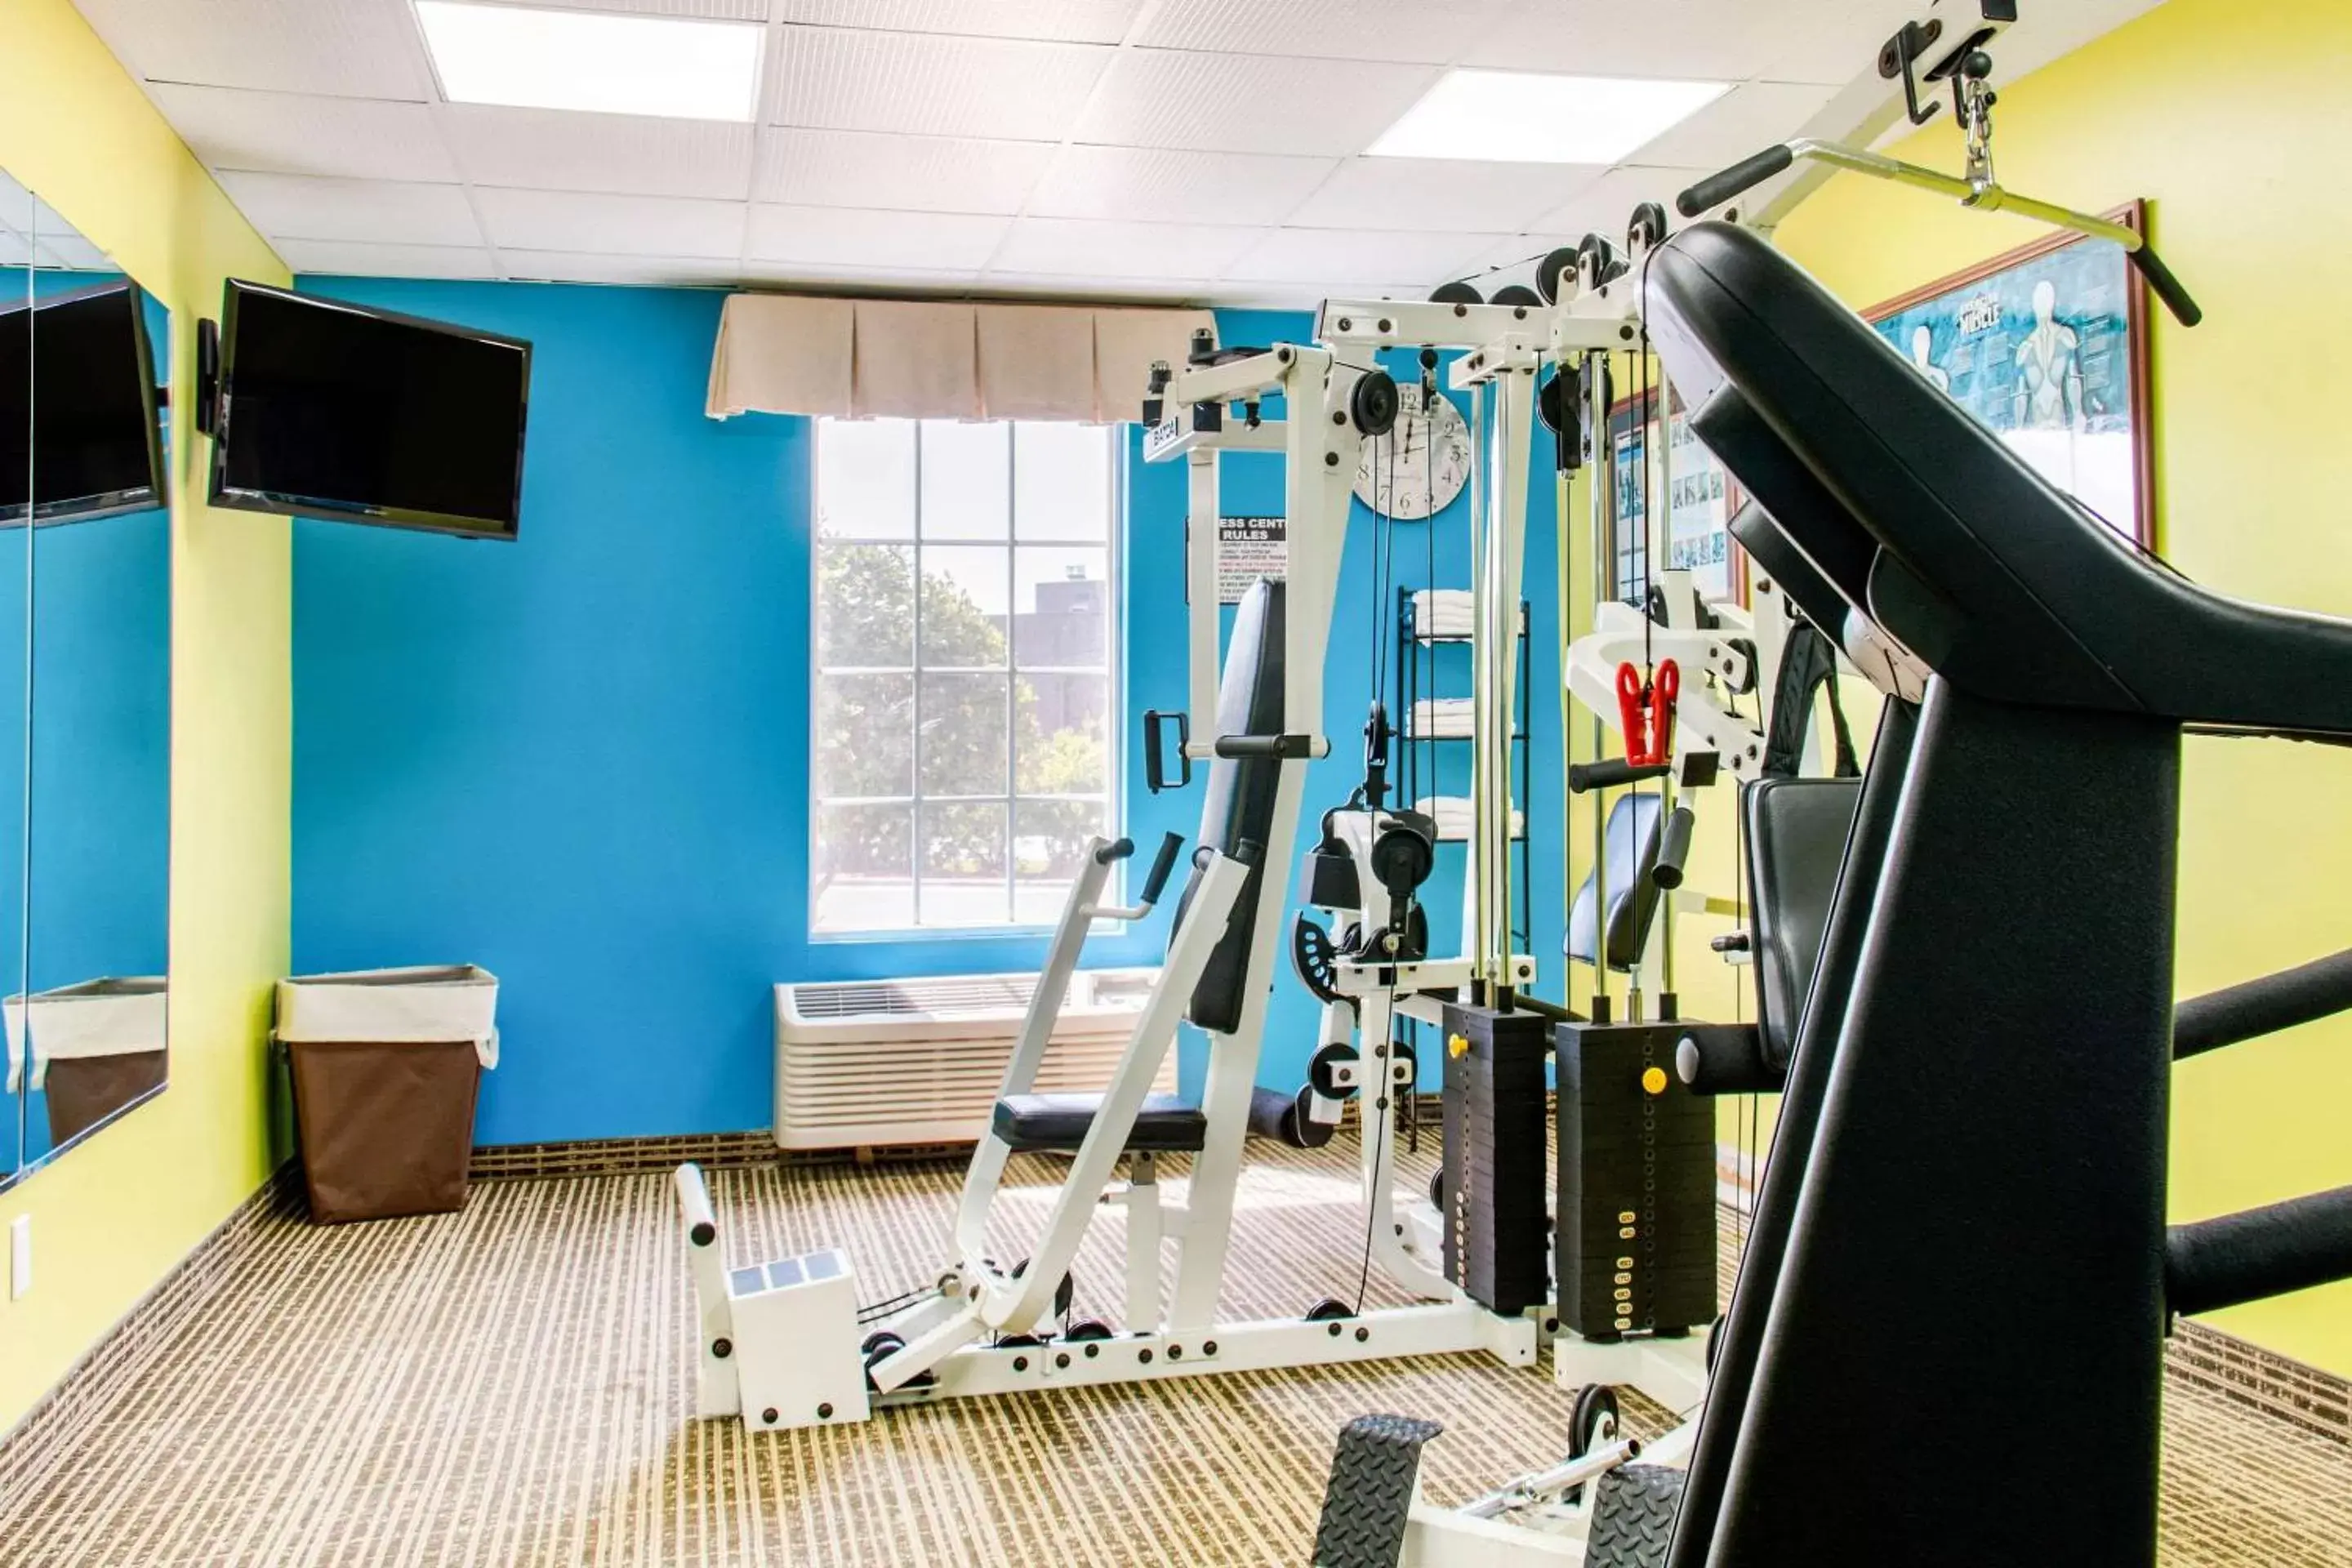 Fitness centre/facilities, Fitness Center/Facilities in Quality Inn Pooler - Savannah I-95